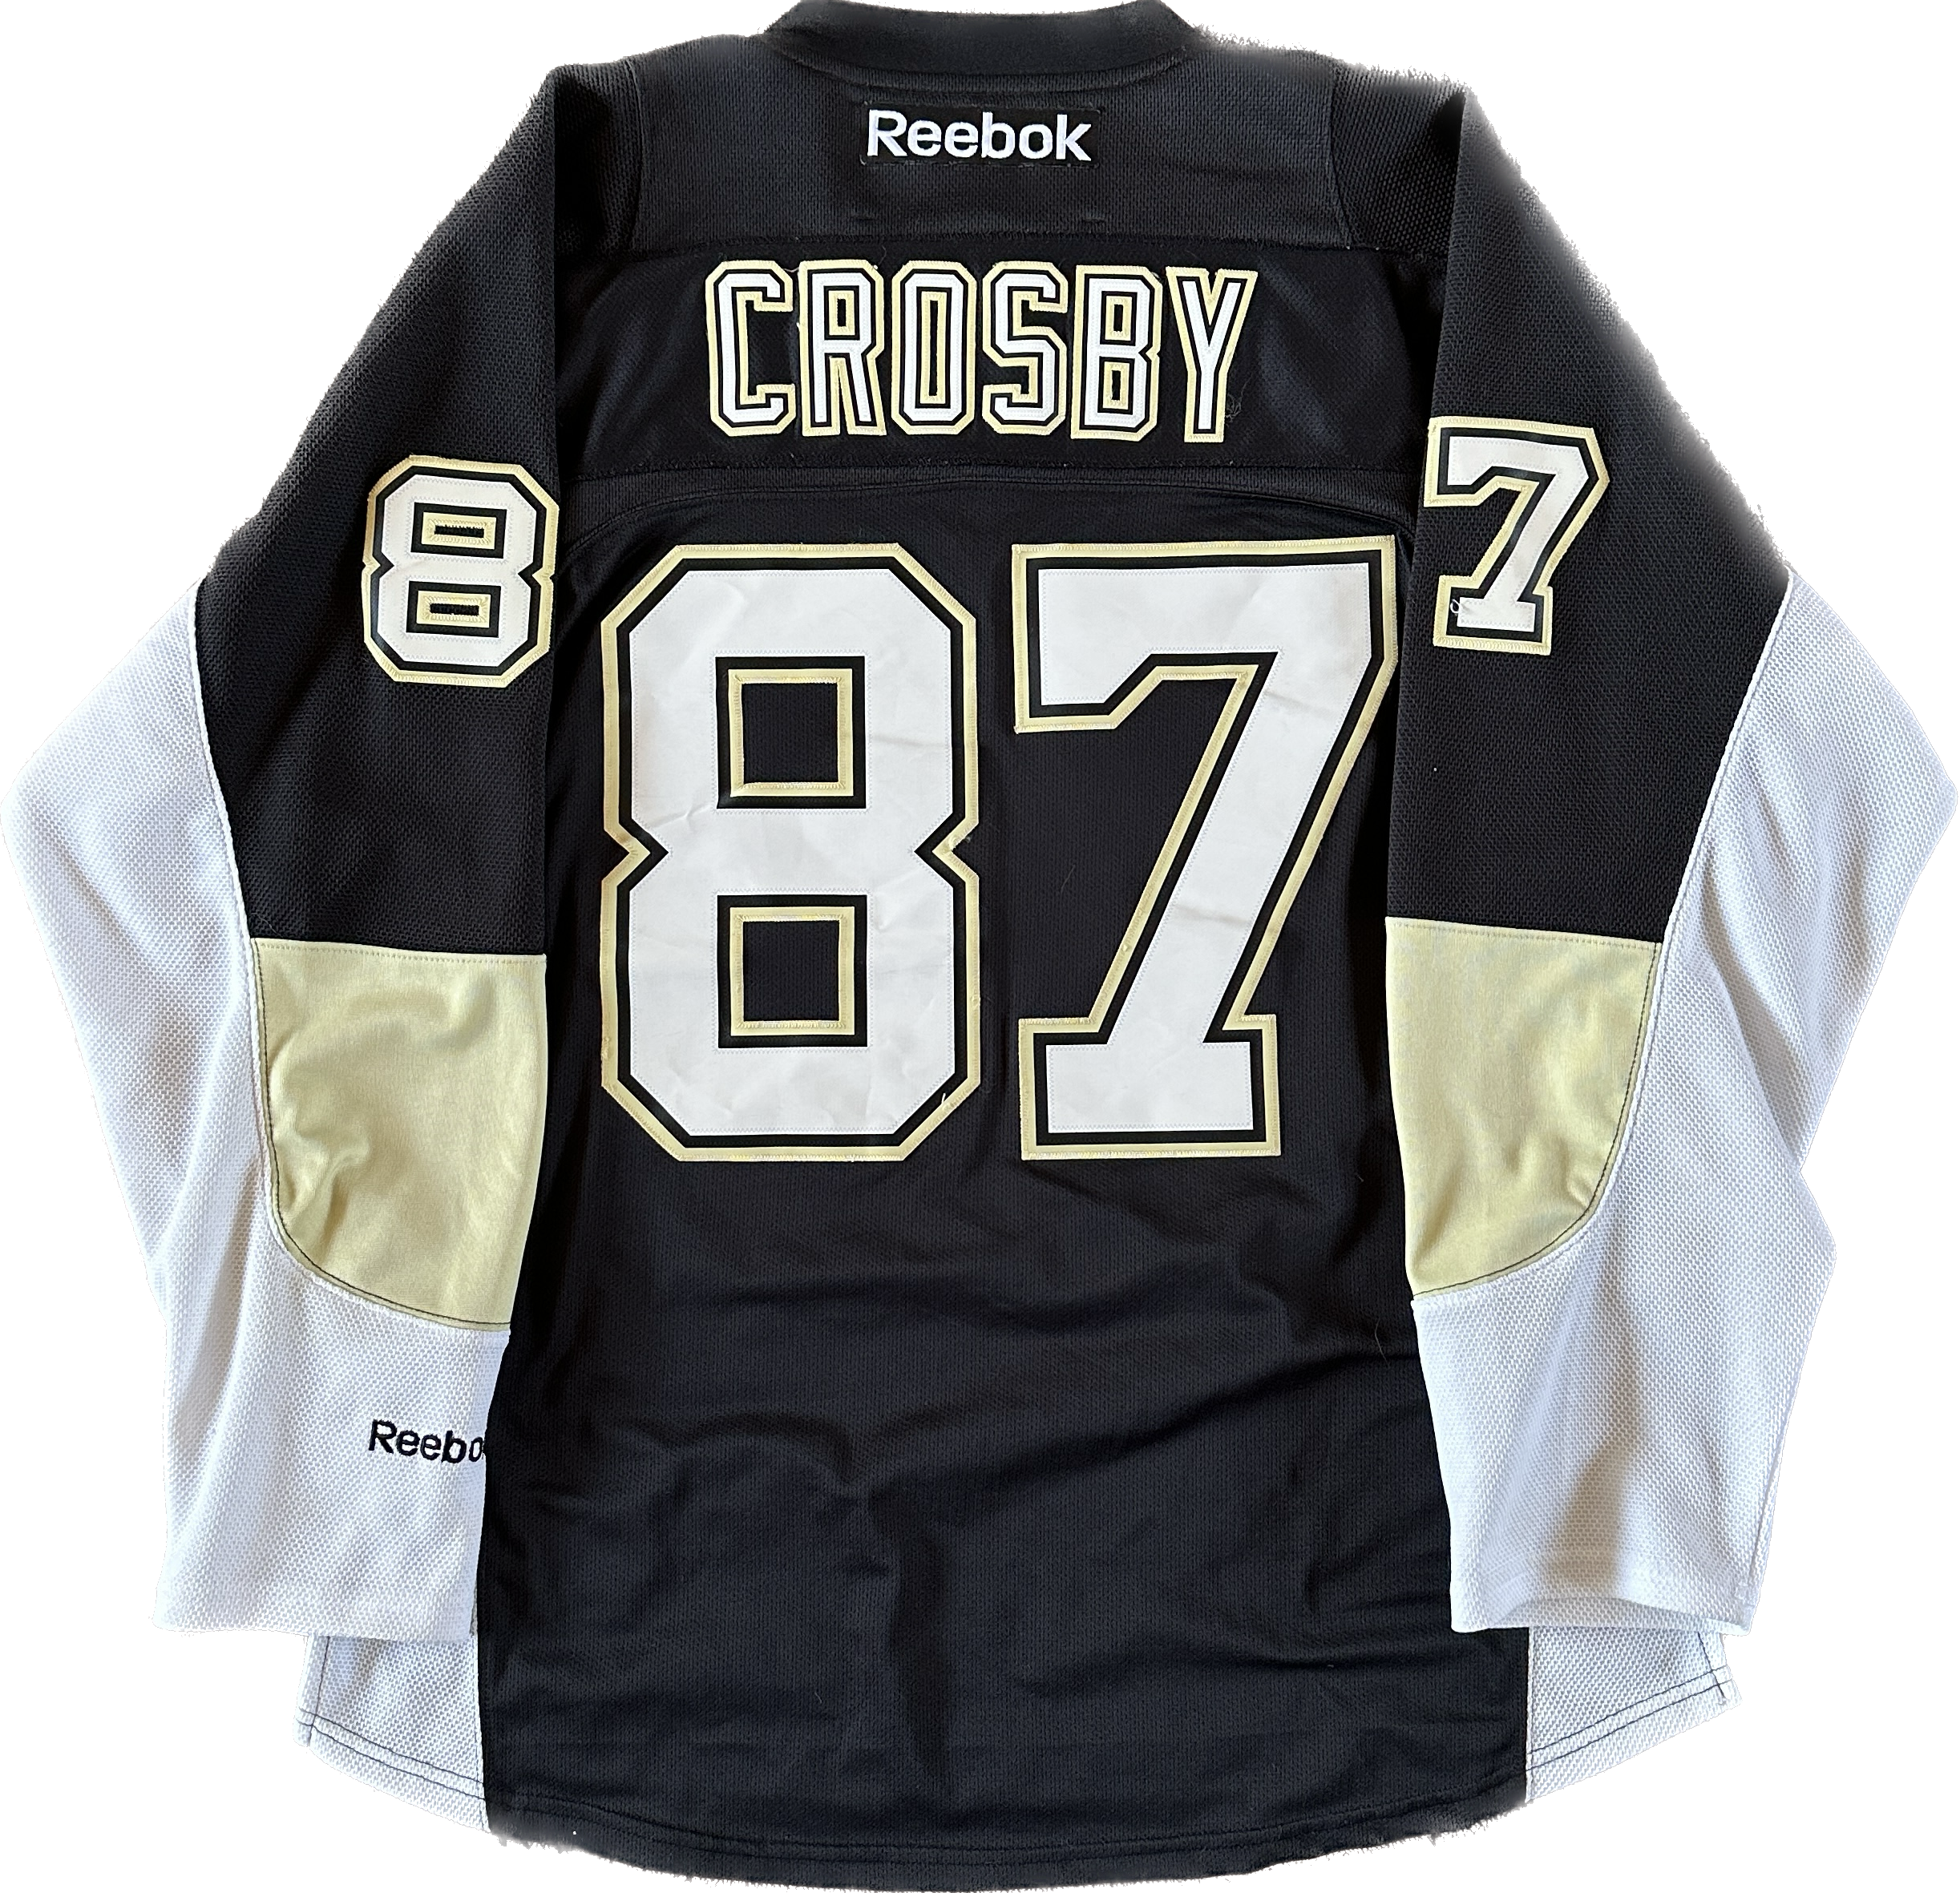 Pittsburgh Penguins NHL Hockey Jersey (L)